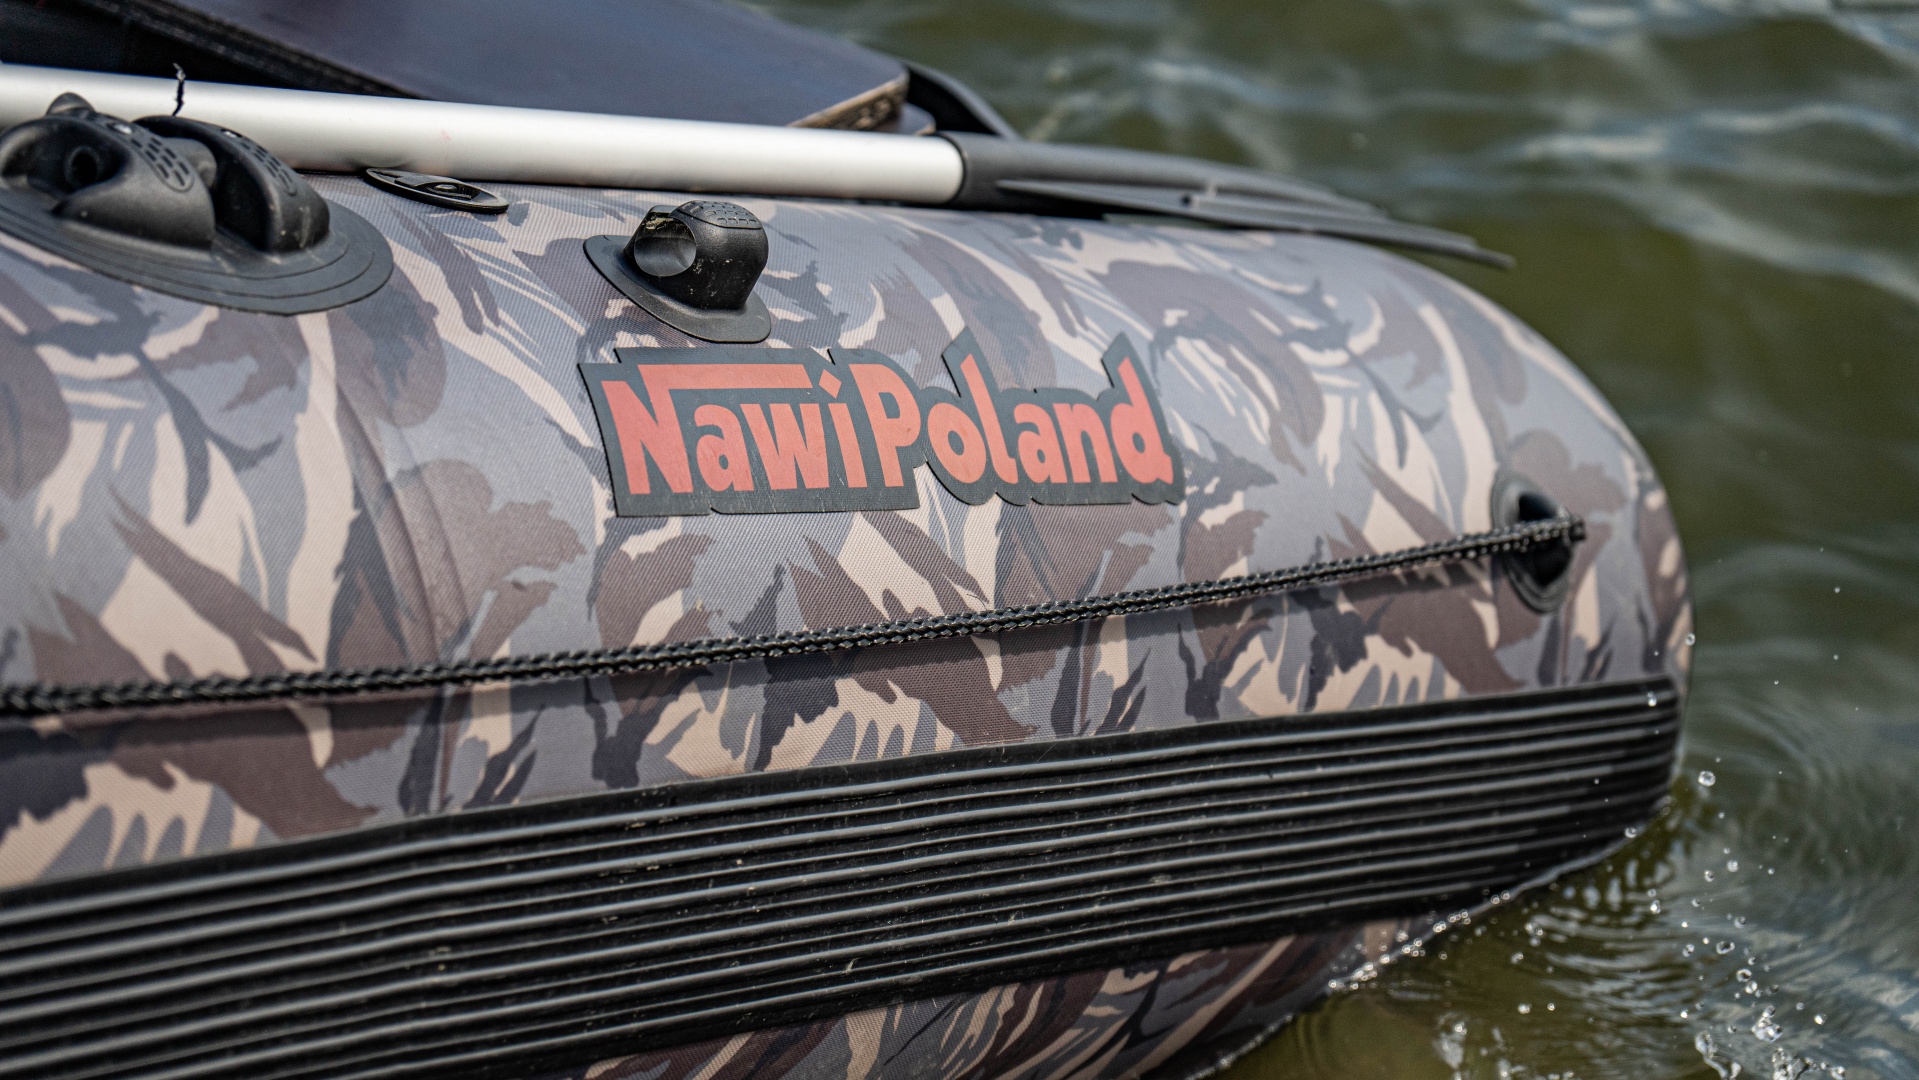 NawiPoland CAT 330 Inflatable Boat - Catamarano